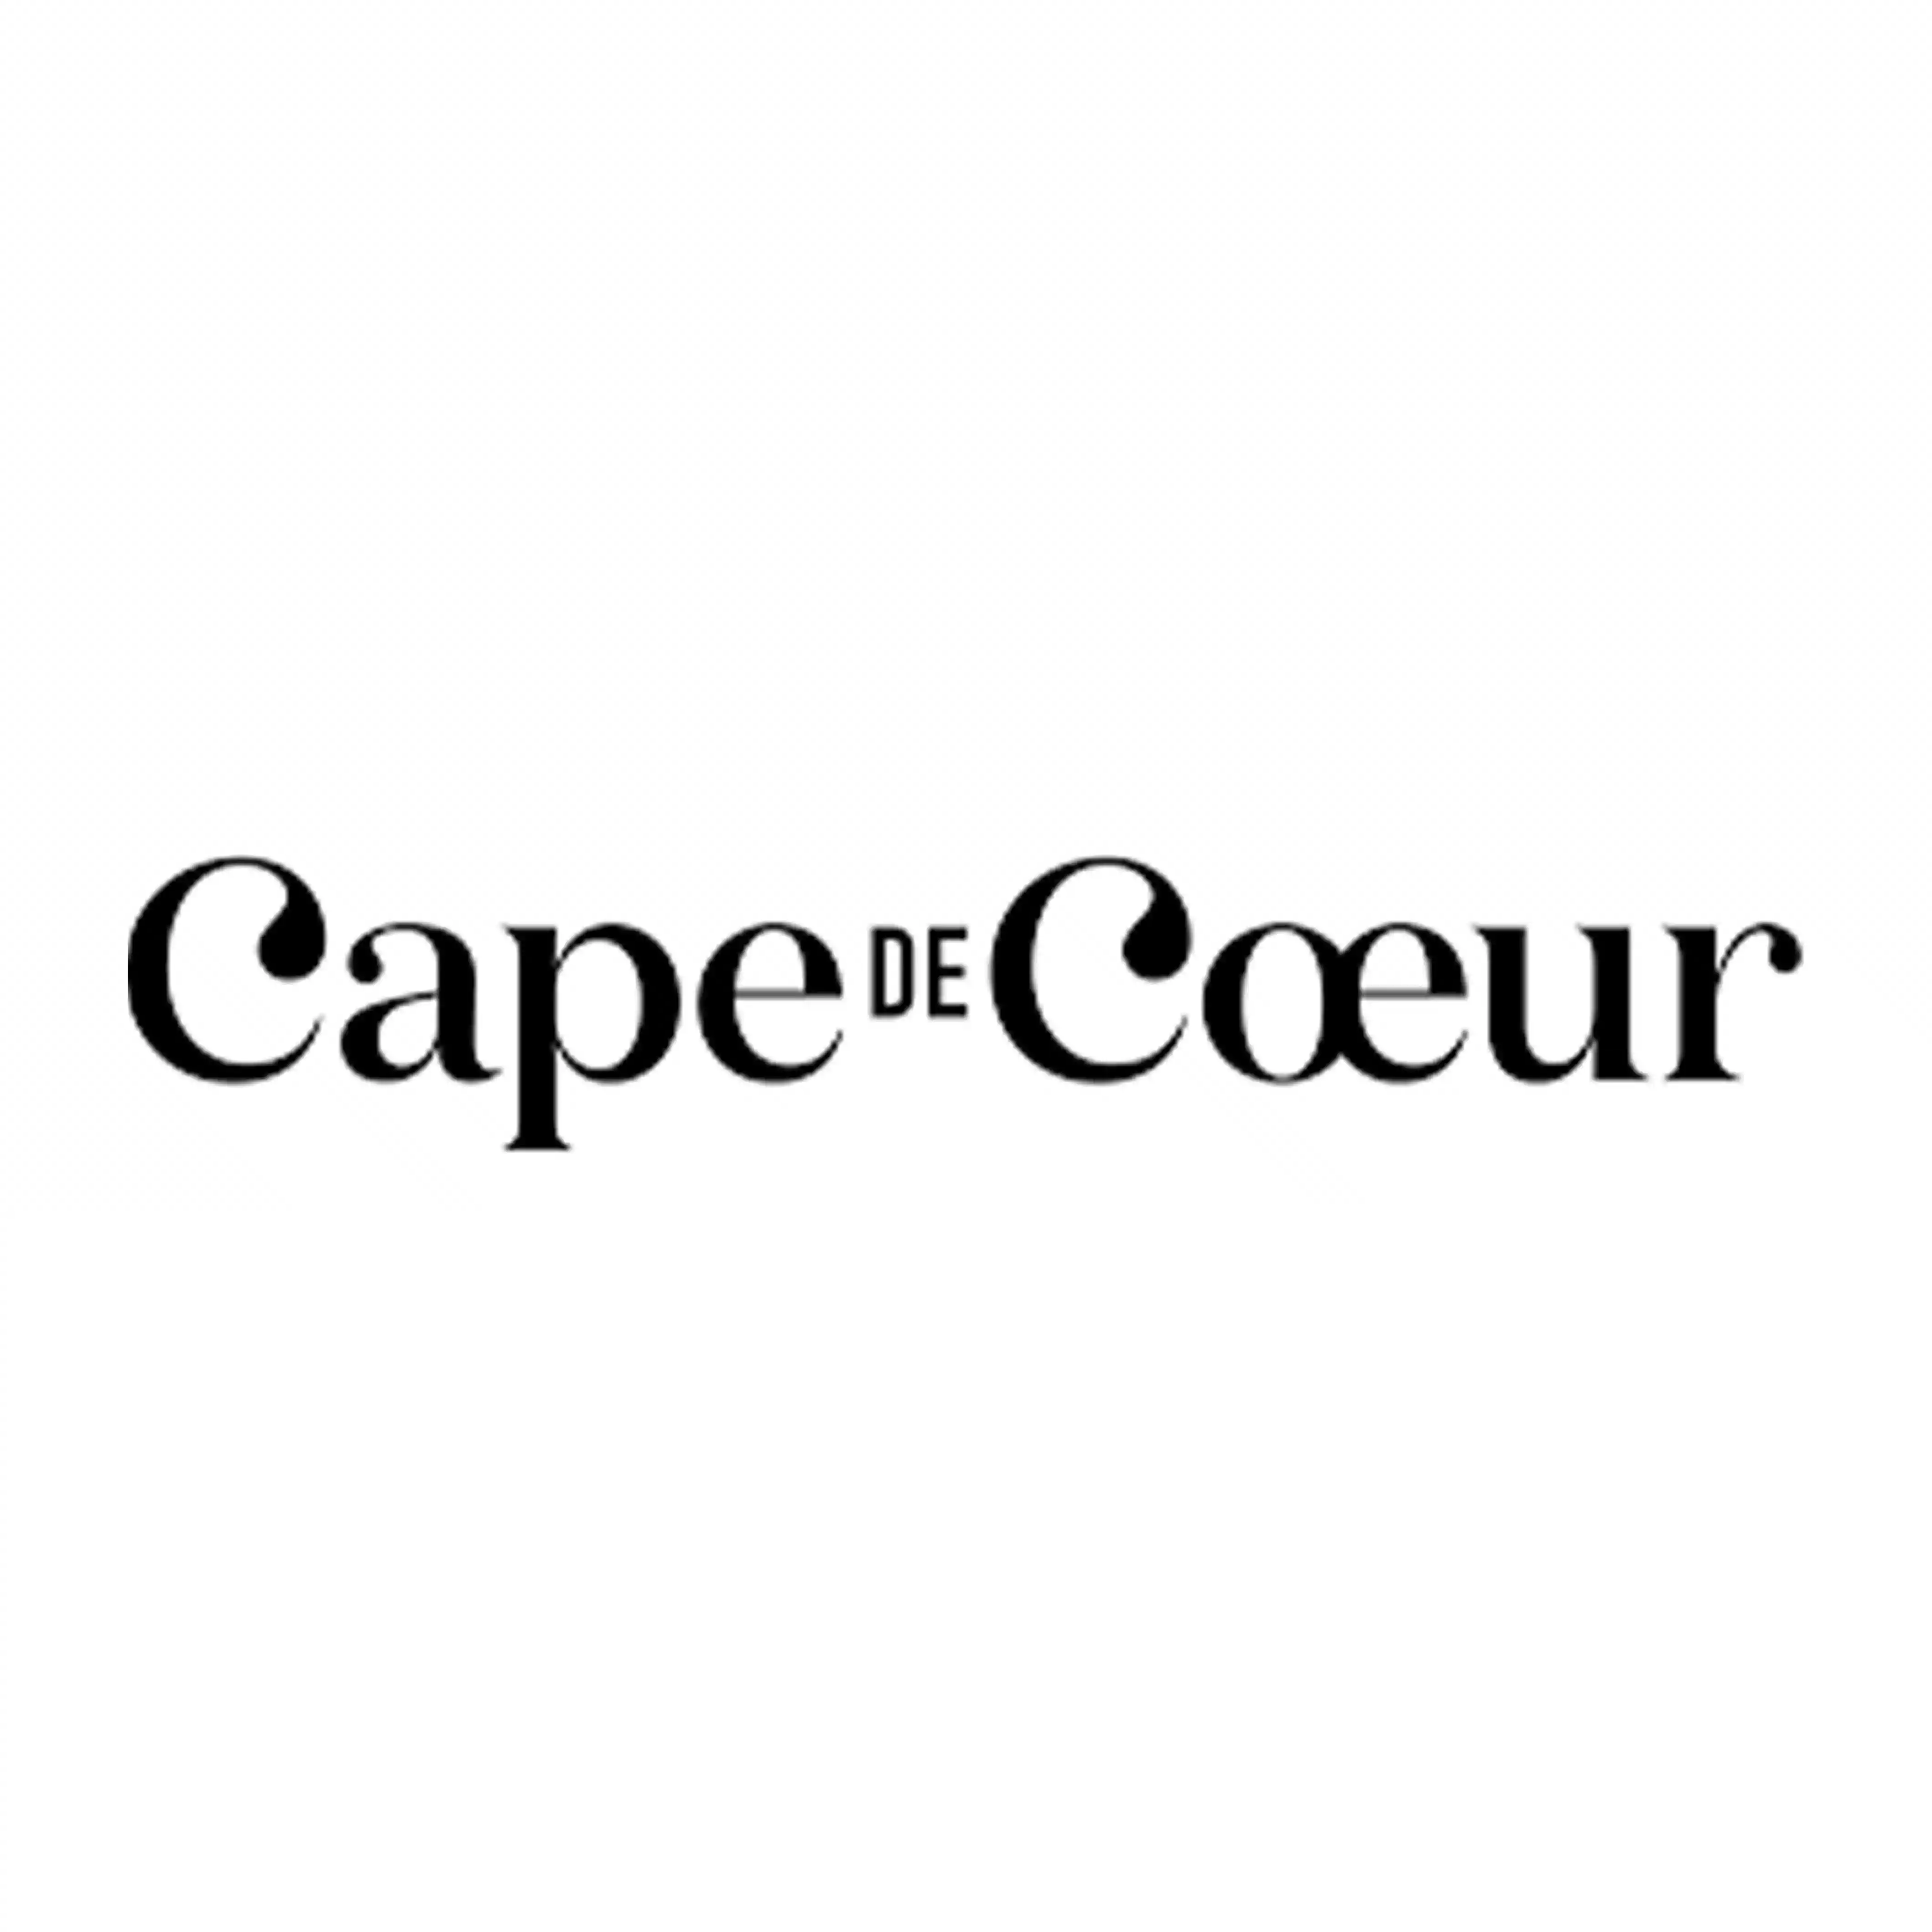 Capedecoeur logo